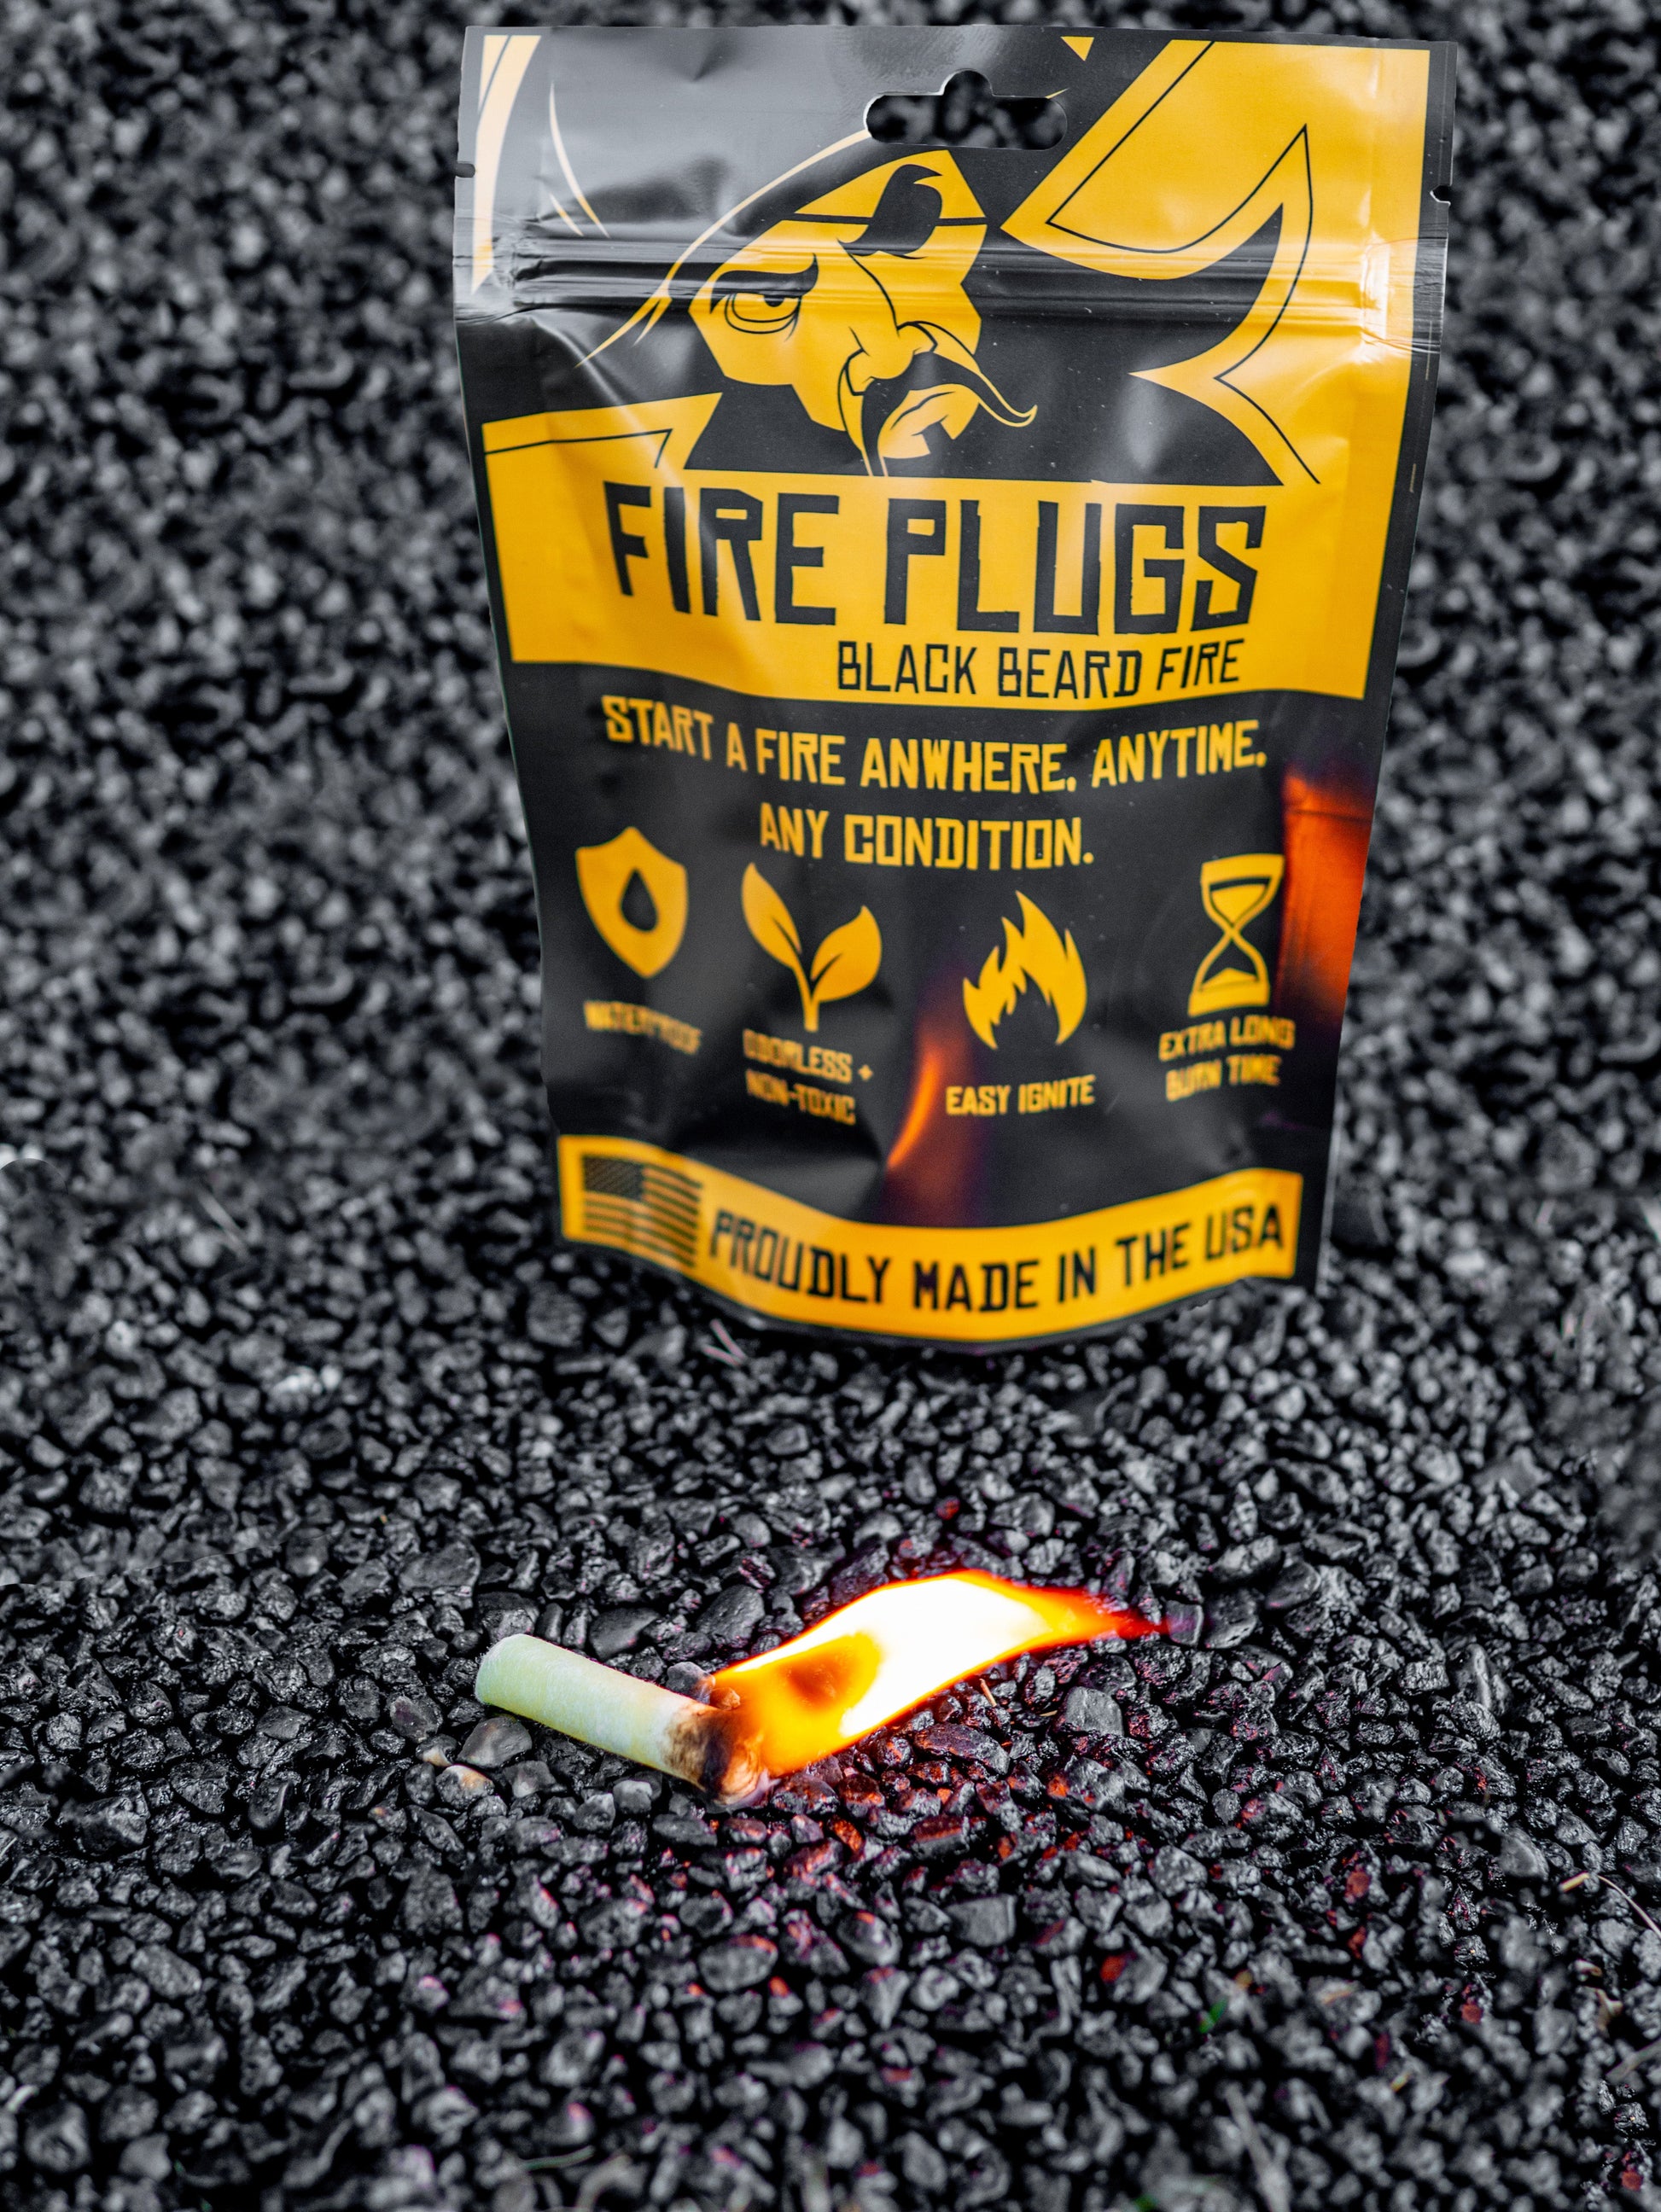 Black Beard Fire Plugs Fire Starter 1 Bag Test fire v3